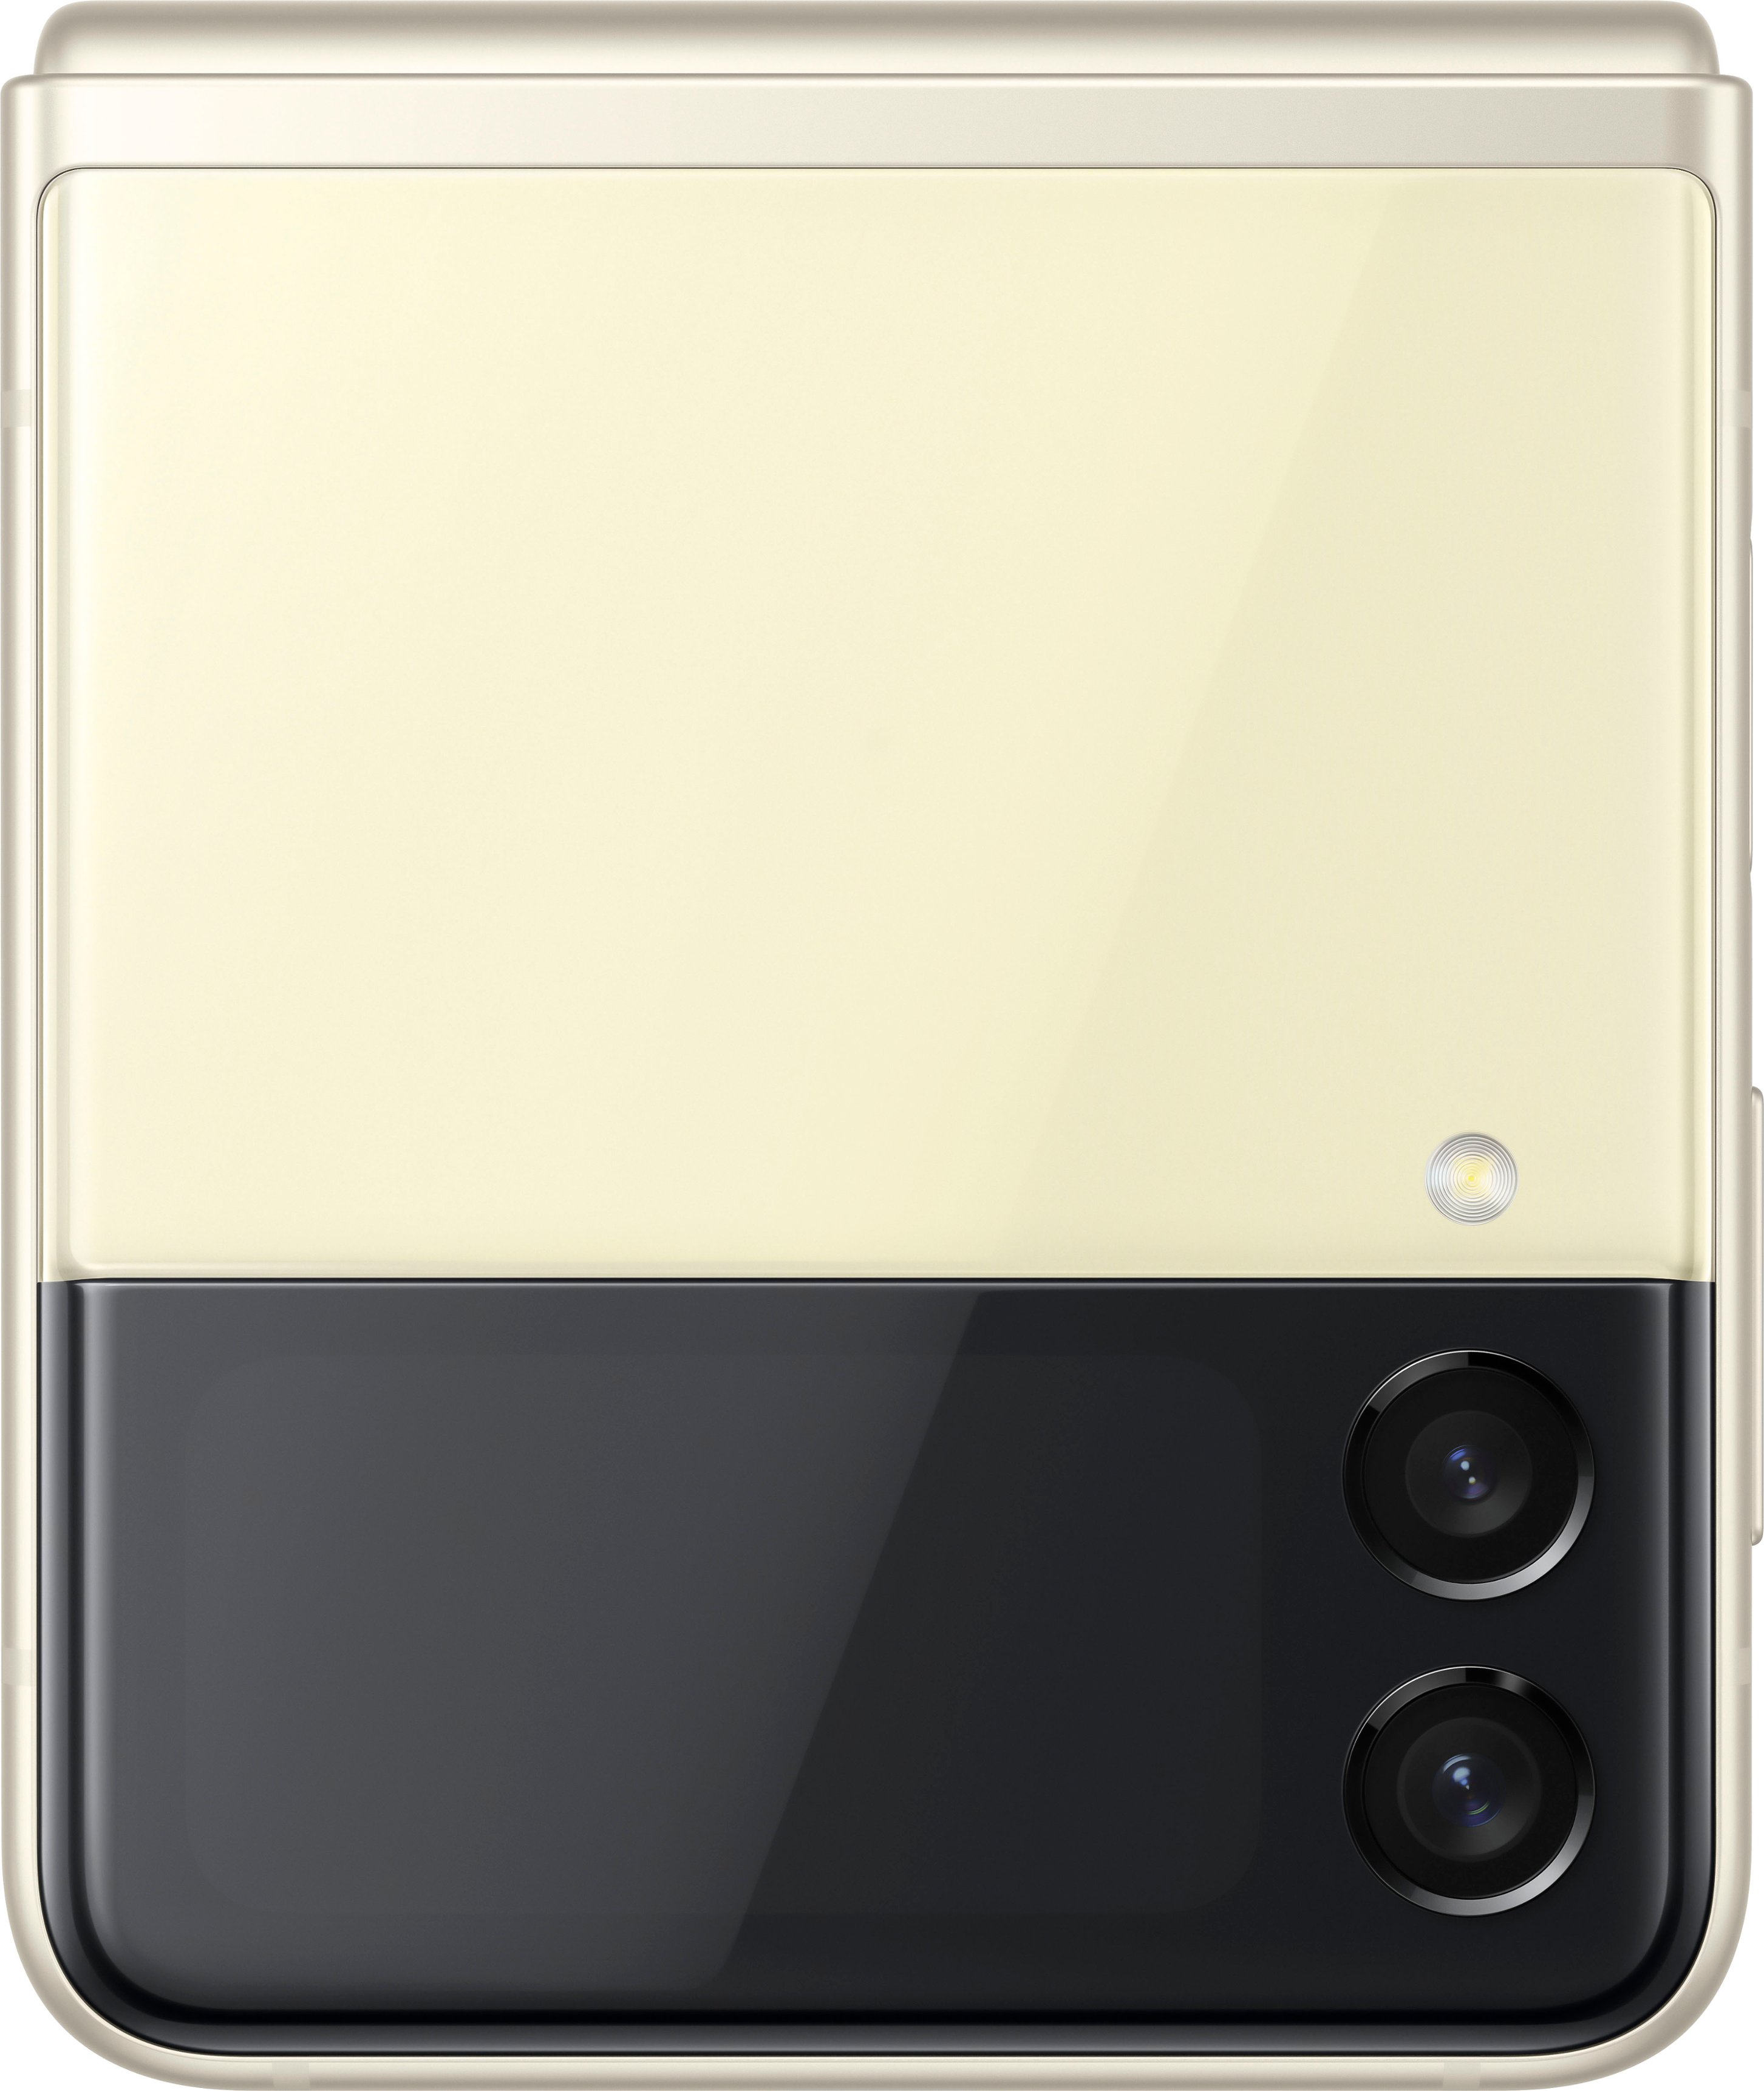 SM-F711UZWEXAA, Galaxy Z Flip3 5G 256GB (Unlocked) White